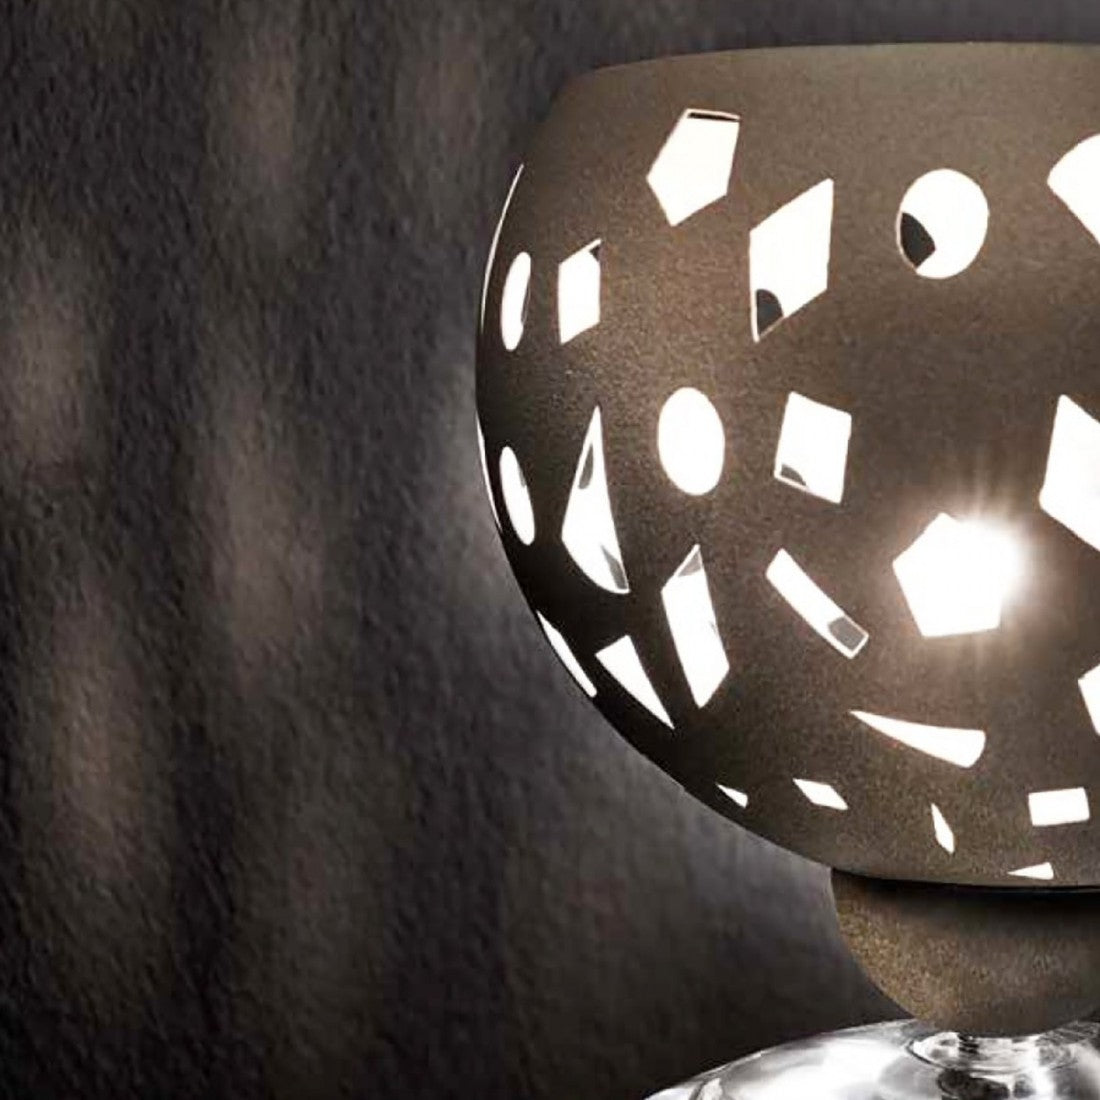 Abat-jour moderna illuminando geo lu e14 led lampada tavolo metallo bianco grigio sabbia traforata interni, colore